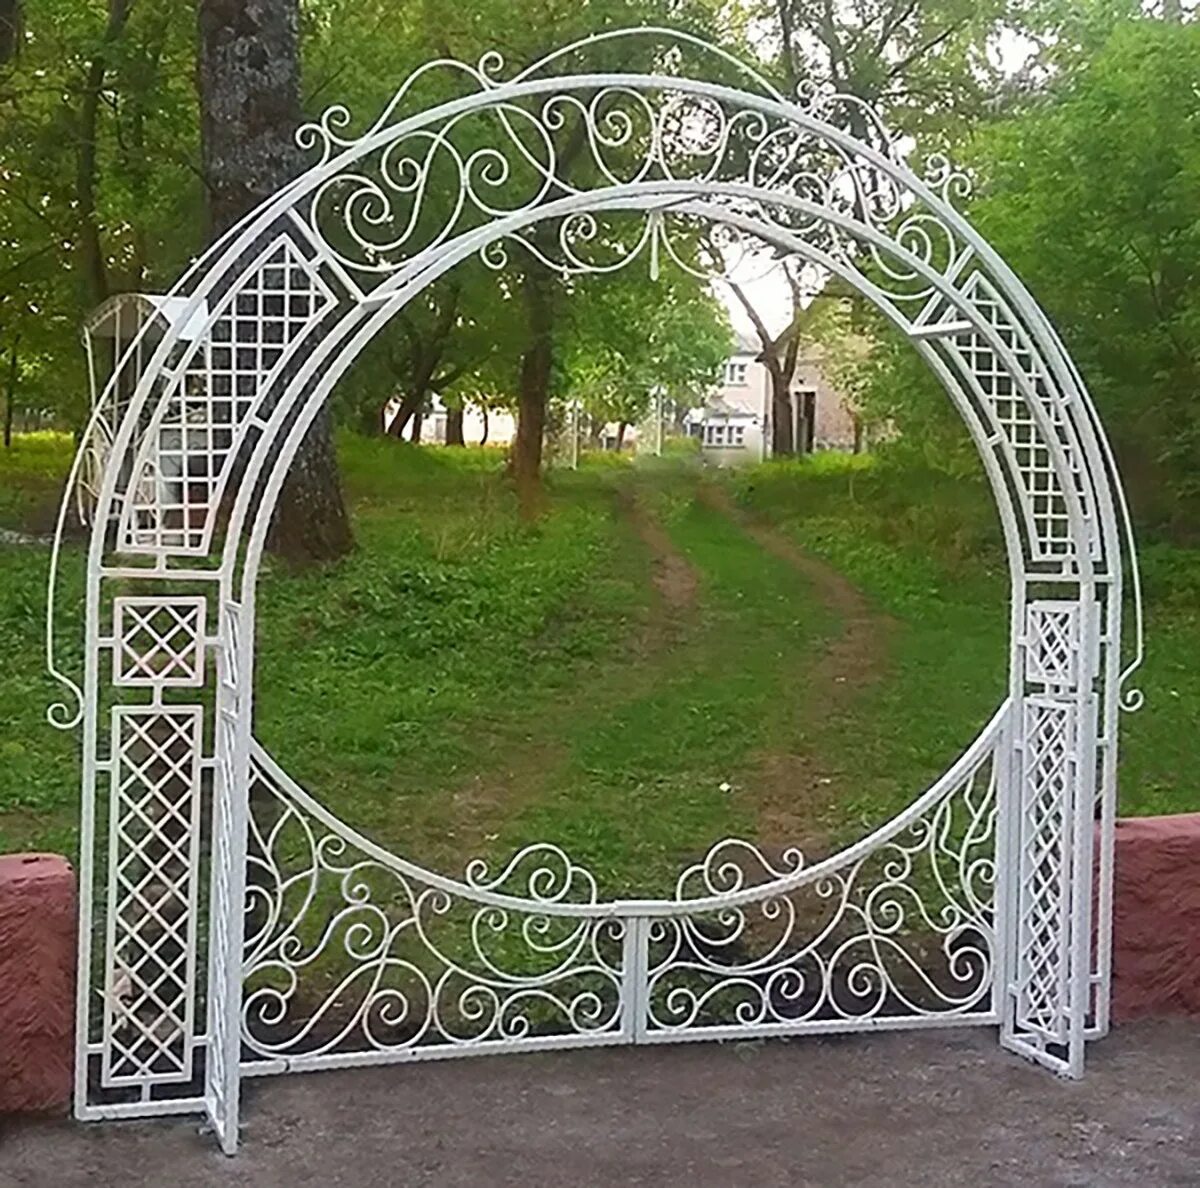 Металлическая арка купить. Арка металлическая. Металлическая арка для свадьбы. Кованная Свадебная арка. Арка металлическая декоративная.